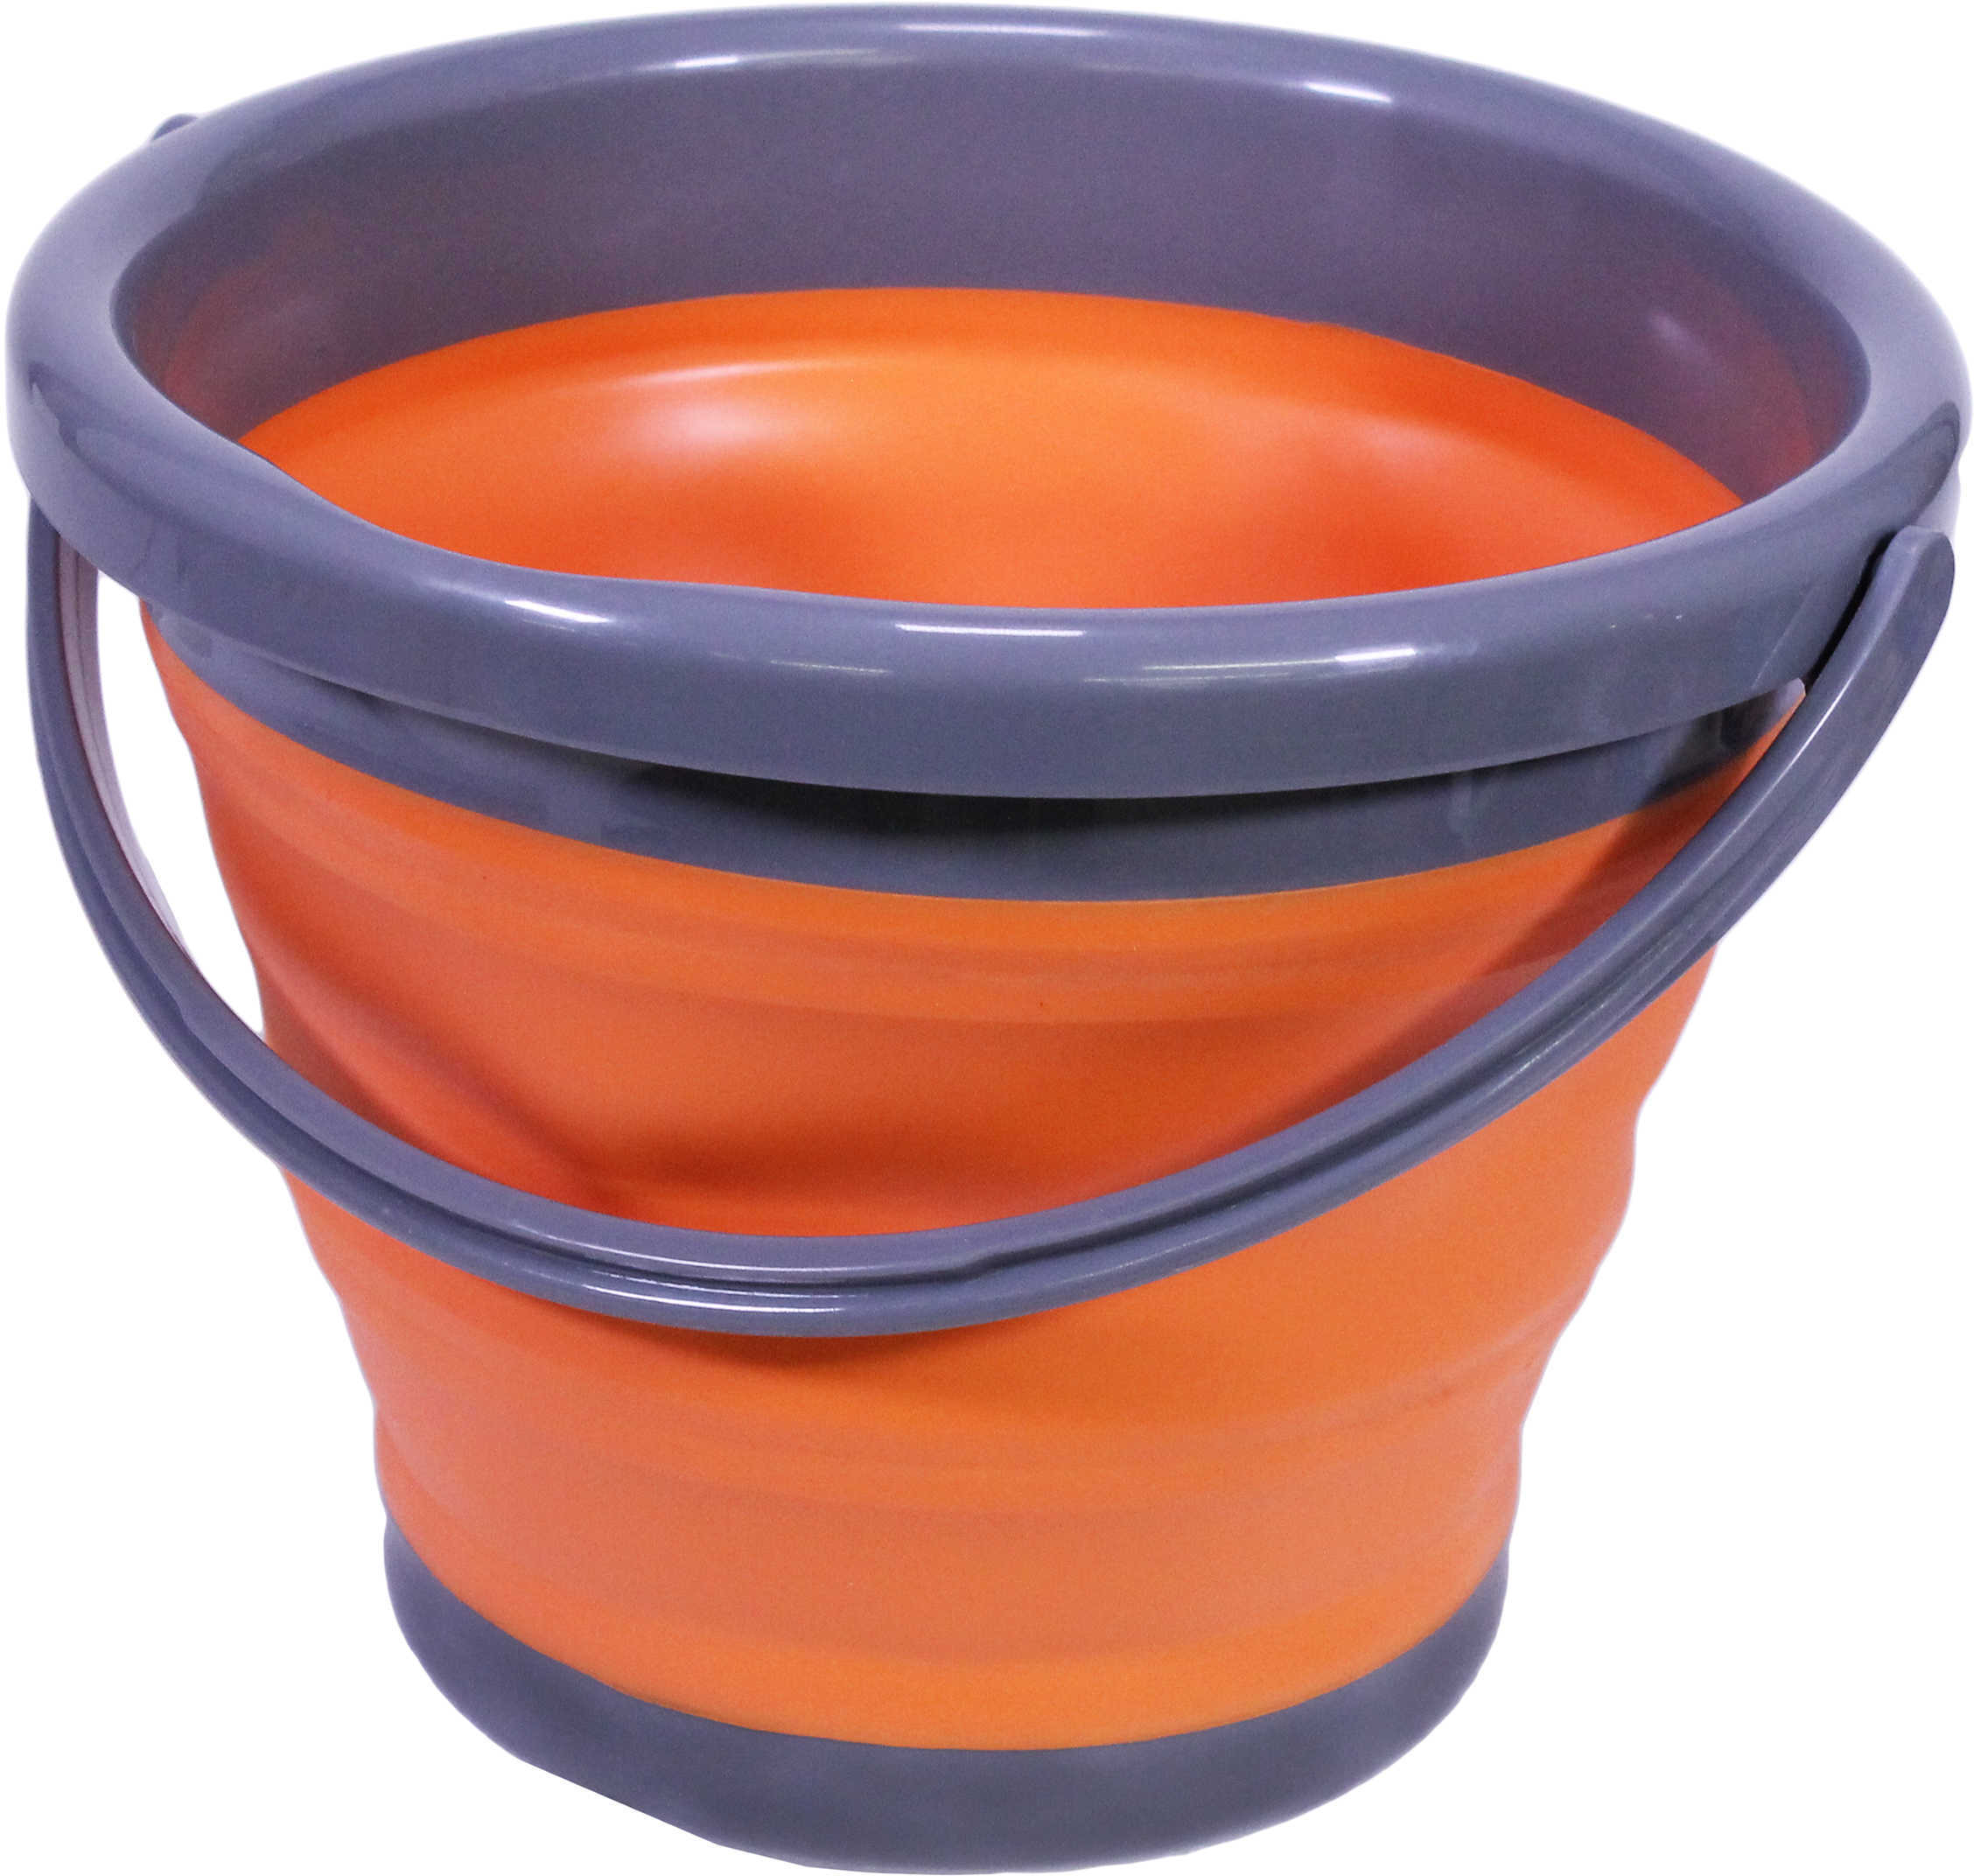 UST FLEXWARE Bucket Orange 1.3 Gallon Capacity 7.75"X10"